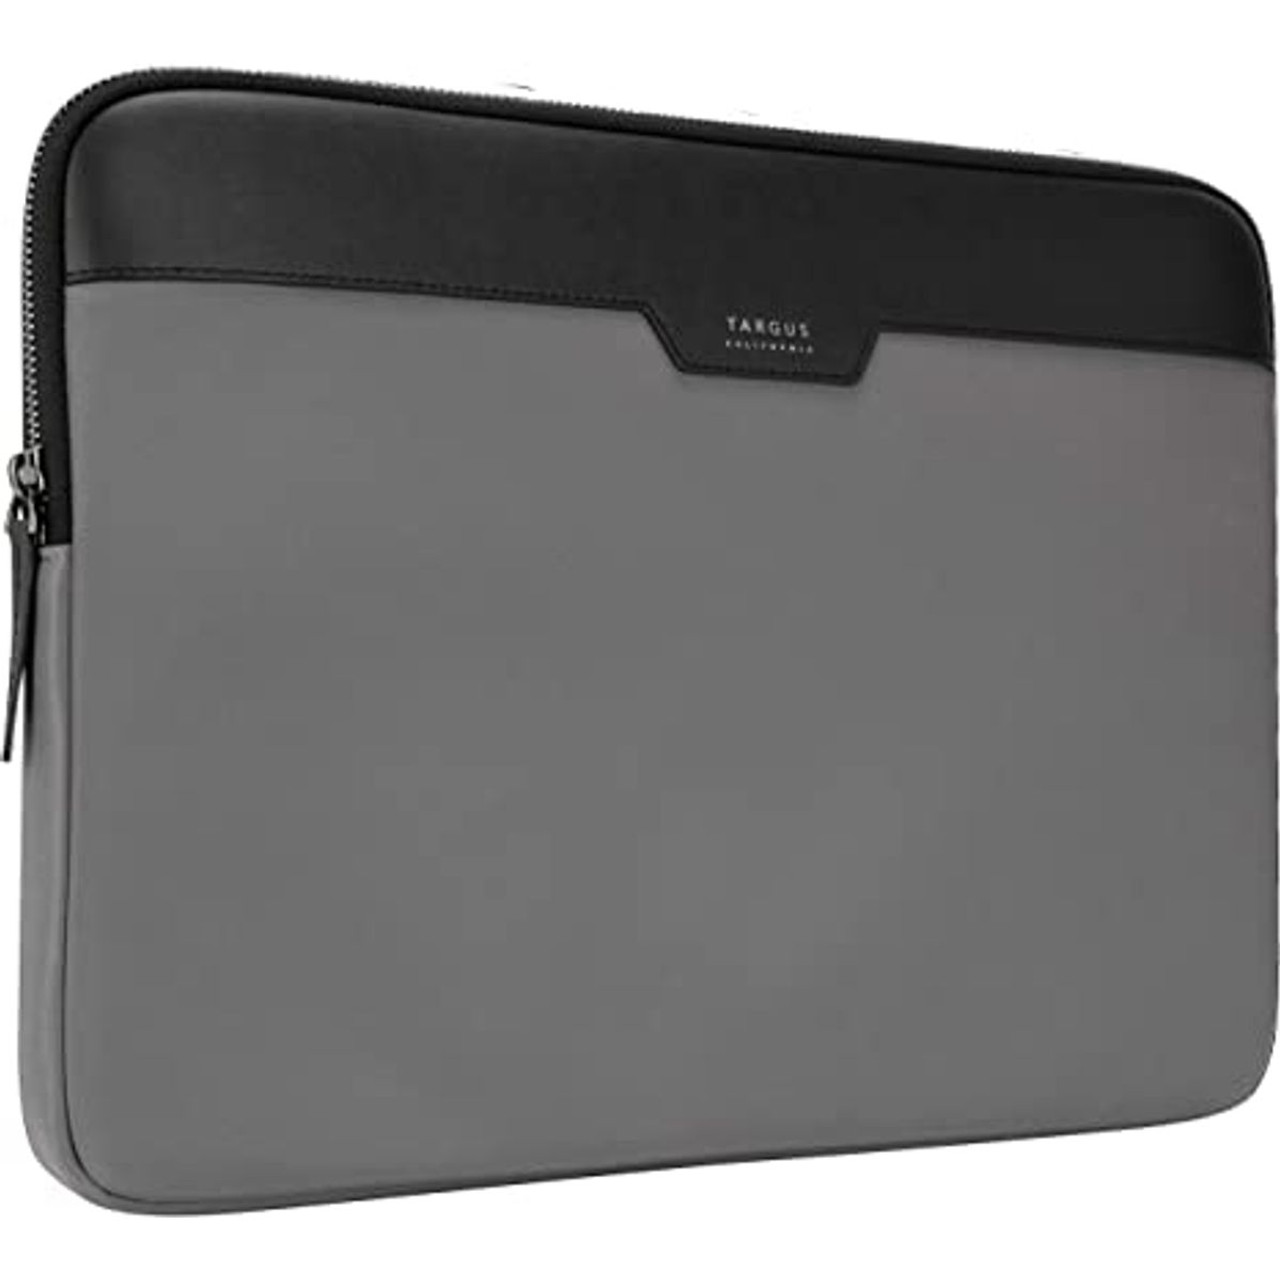 Targus® Newport® 11-12-Inch Laptop Sleeve product image